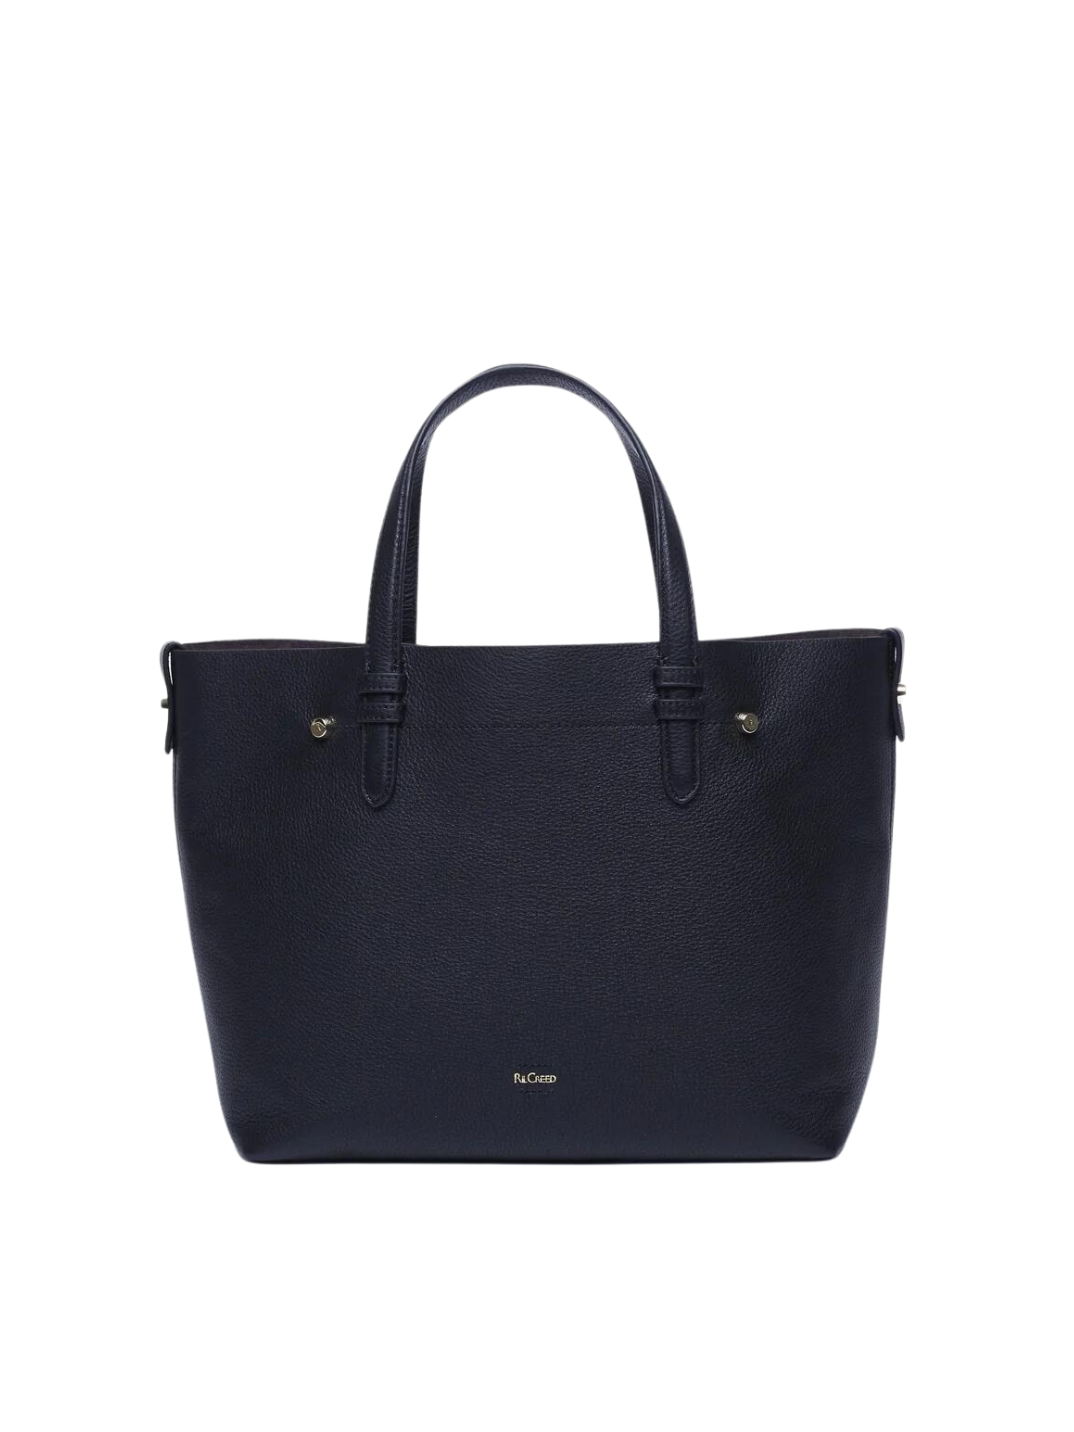 the eva bag sustainable women's fashion handbag